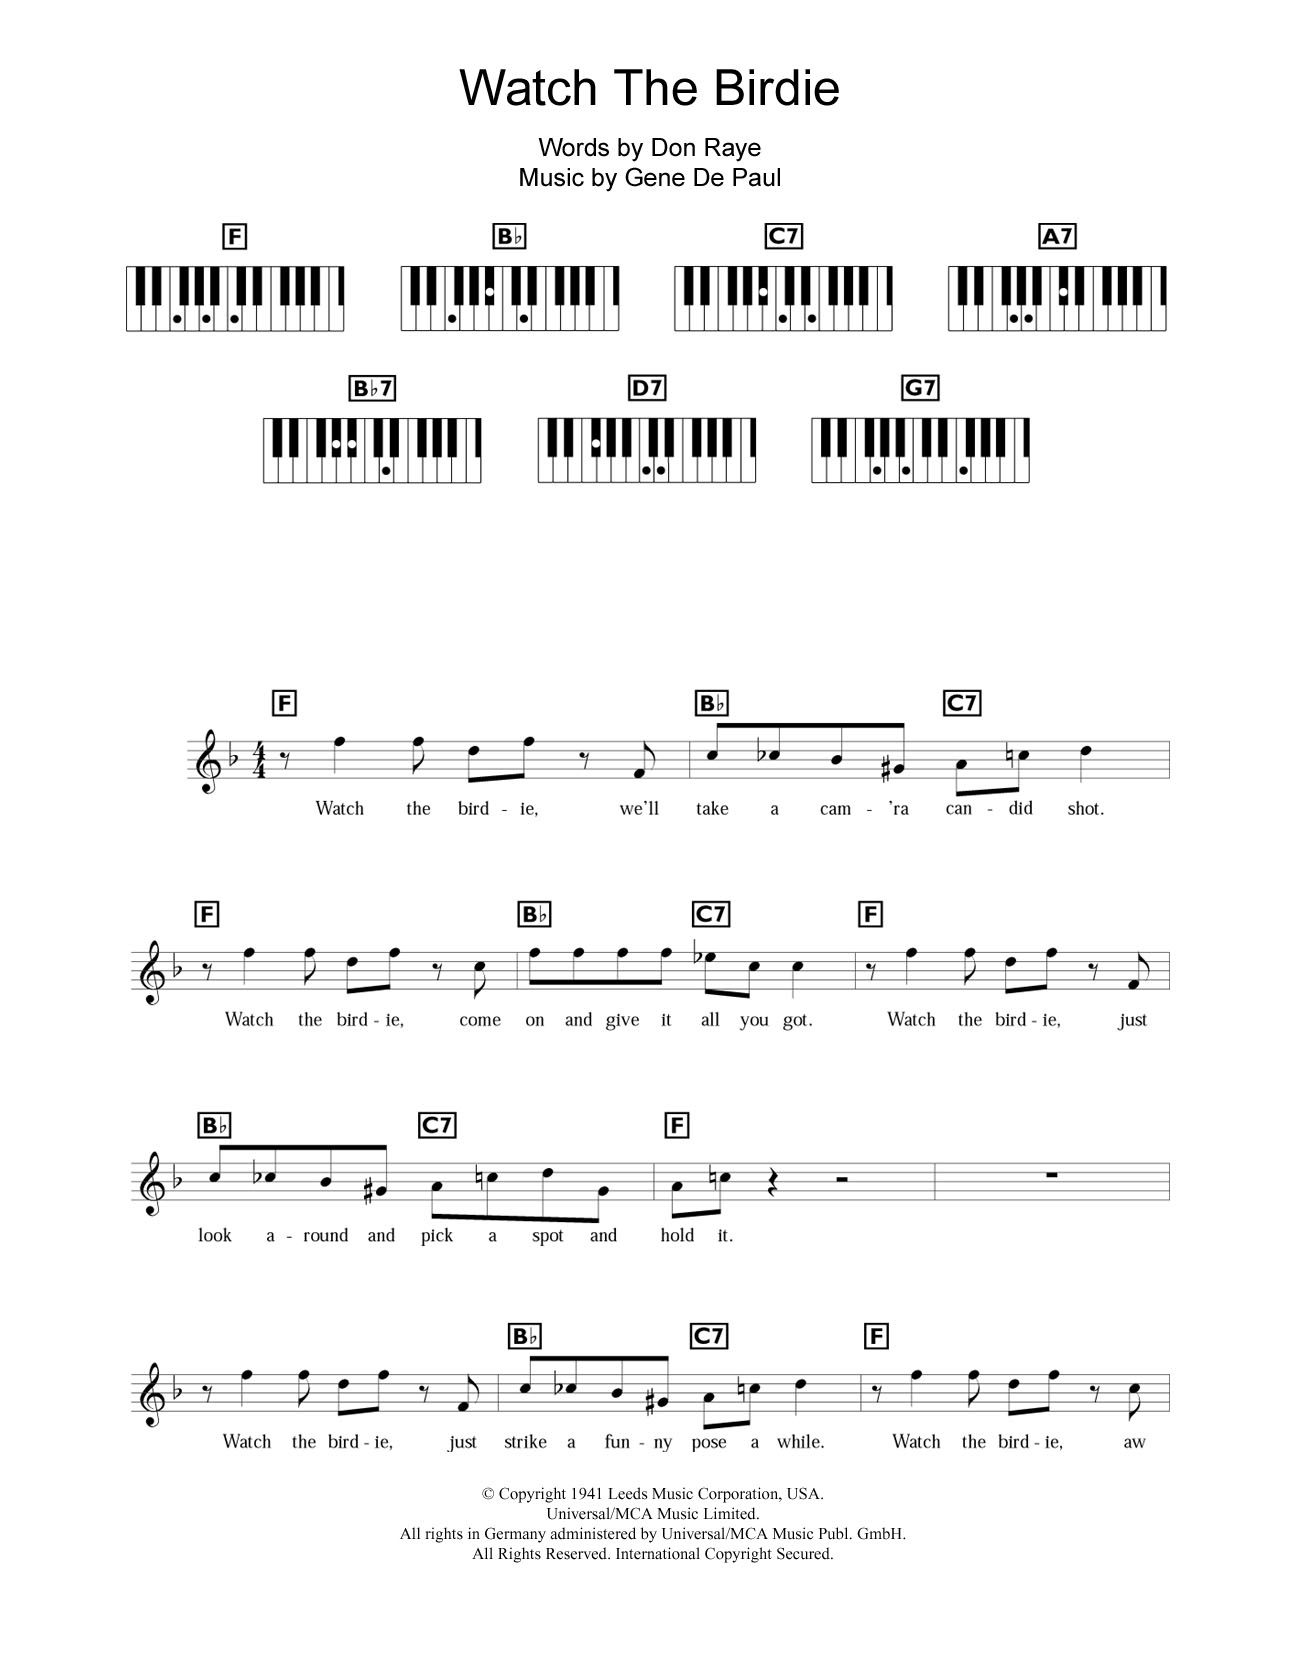 Download Gene de Paul Watch The Birdie Sheet Music and learn how to play Keyboard PDF digital score in minutes